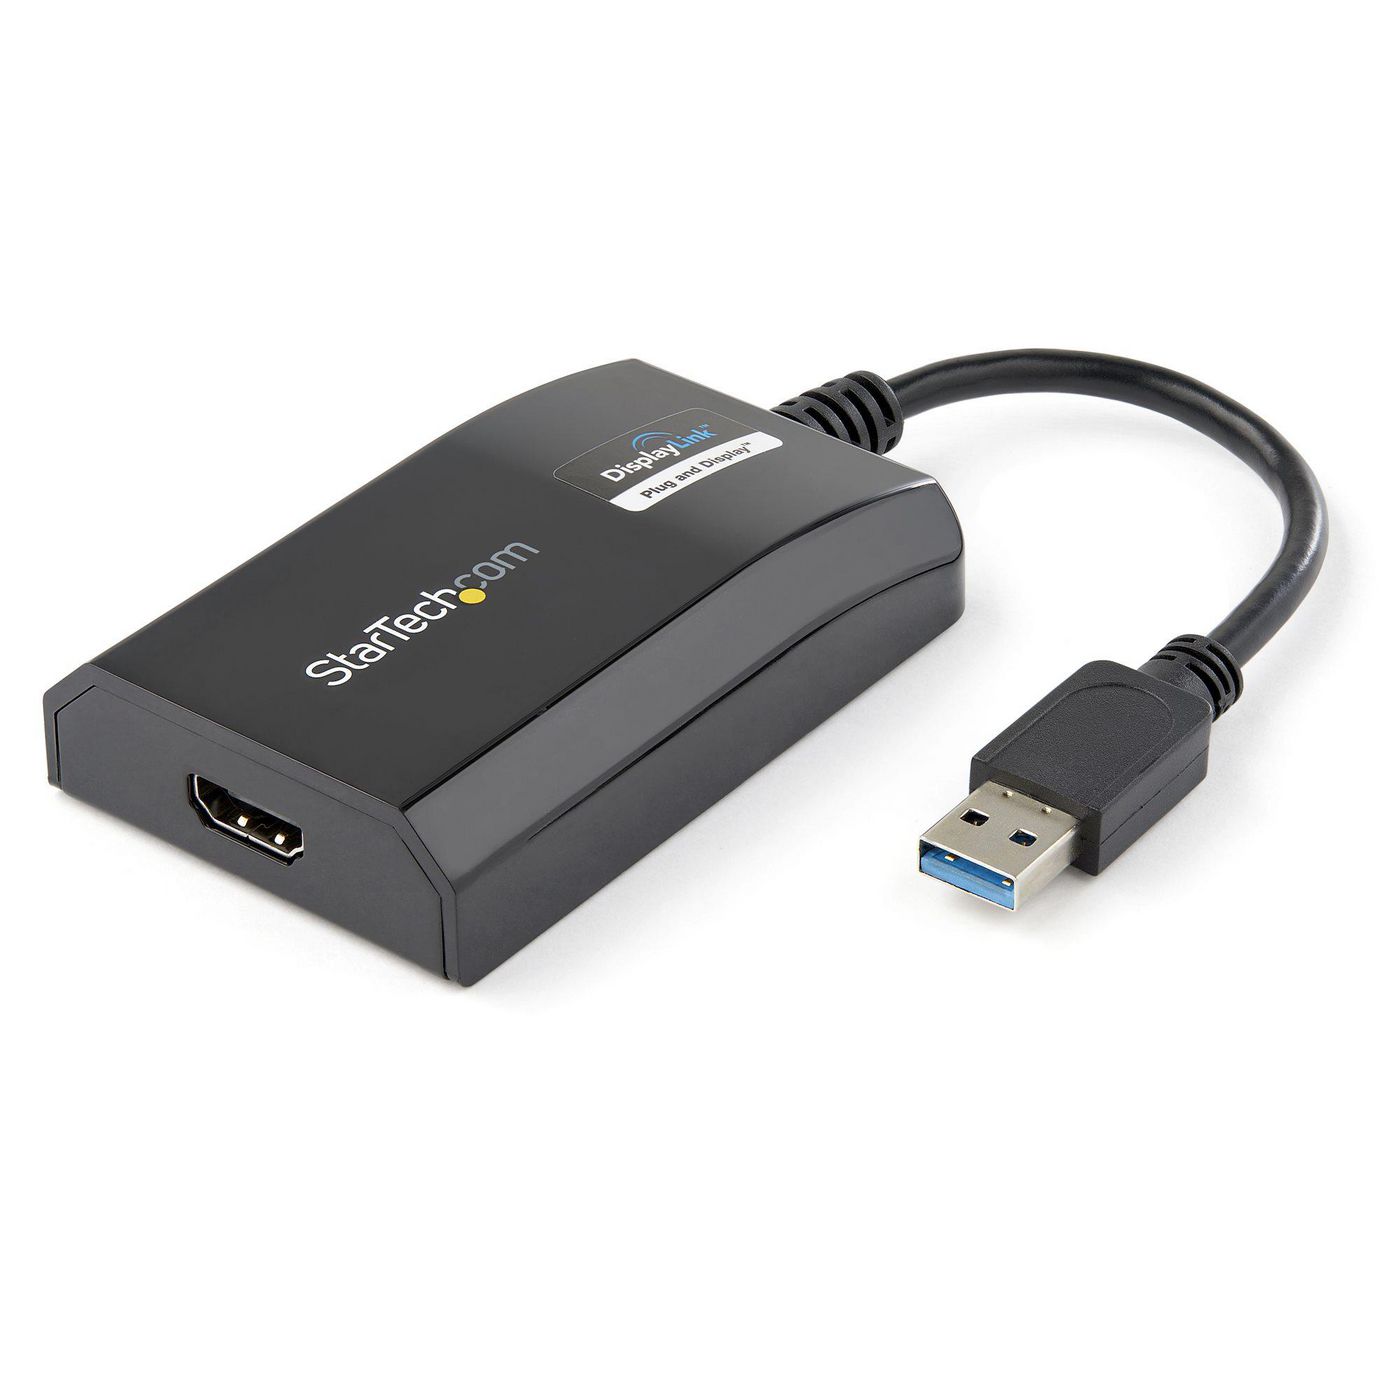 USB32HDPRO, StarTech.com StarTech.com 3.0 to HDMI Adapter - DisplayLink Certified 1080p (1920x1200) - USB Type-A HDMI Display Adapter Converter for Monitor - External Video & Graphics Card - Windows/Mac (